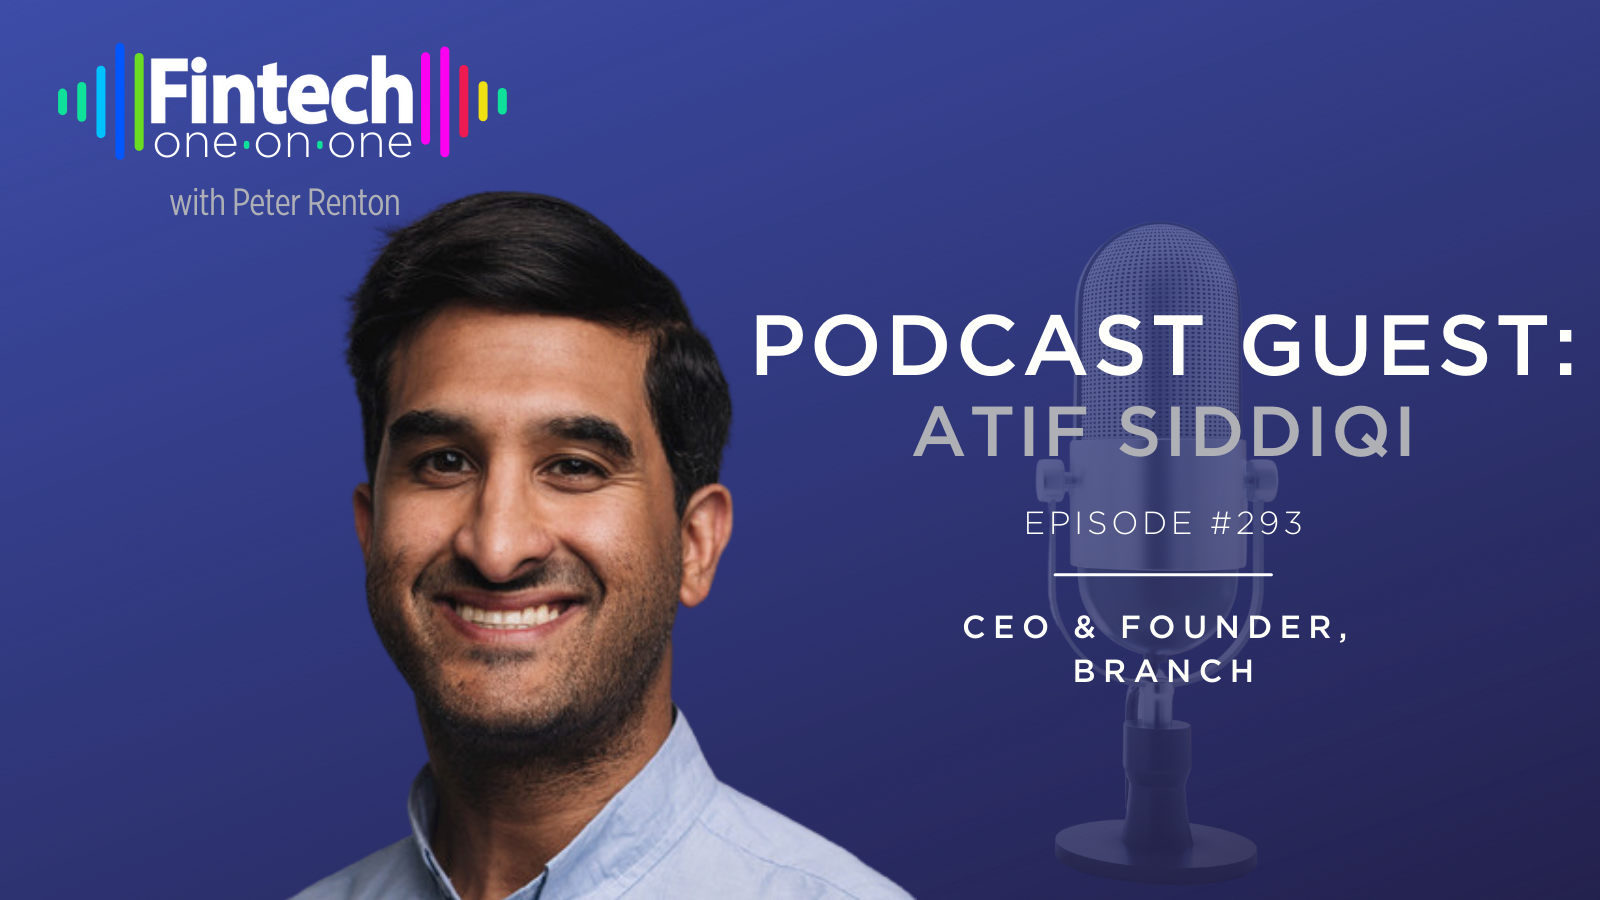 Atif Siddiqi, Founder & CEO of Branch